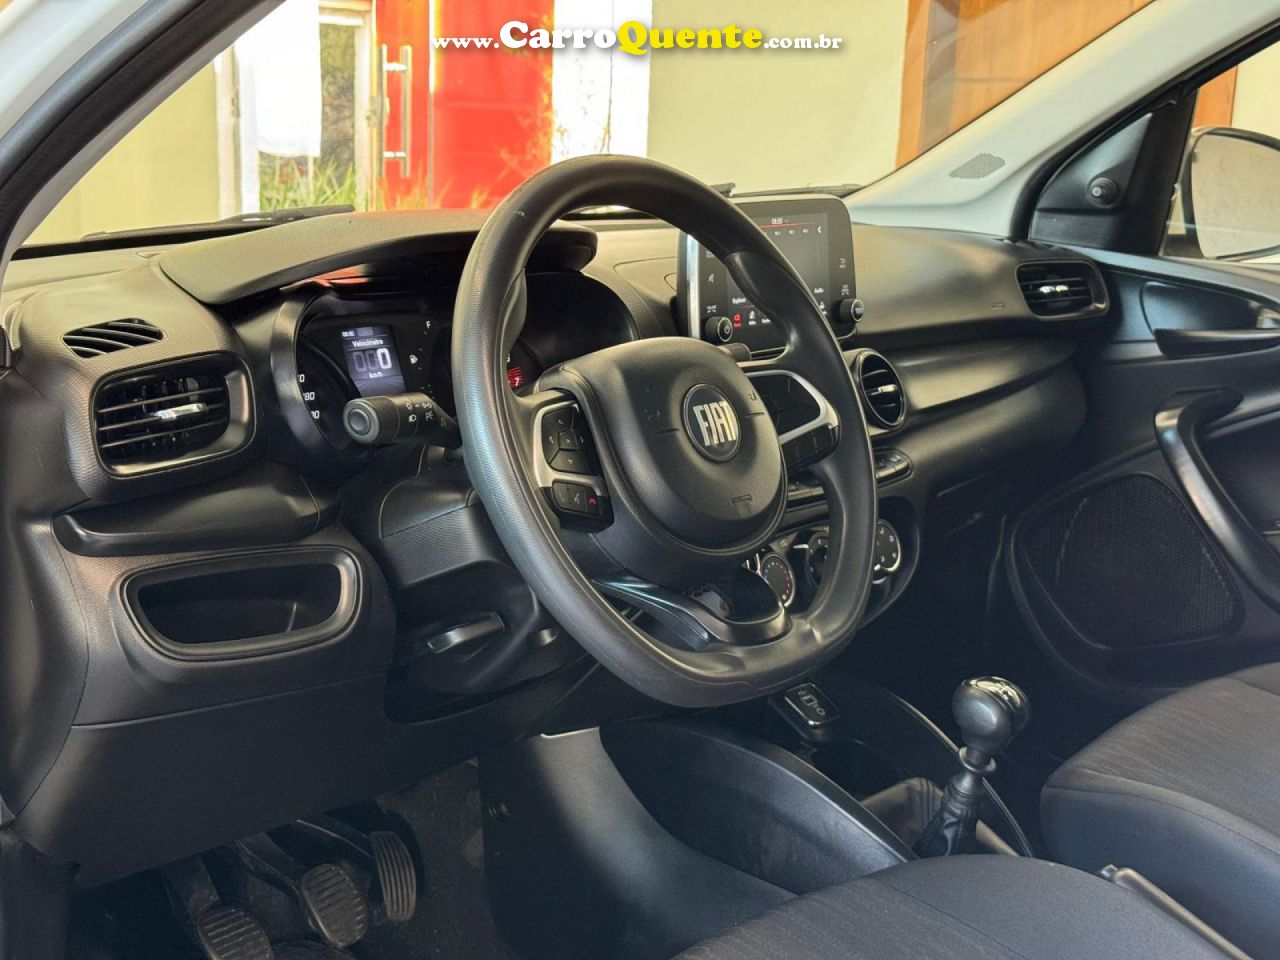 FIAT   ARGO DRIVE 1.0 6V FLEX   BRANCO 2021 1.0 FLEX - Loja